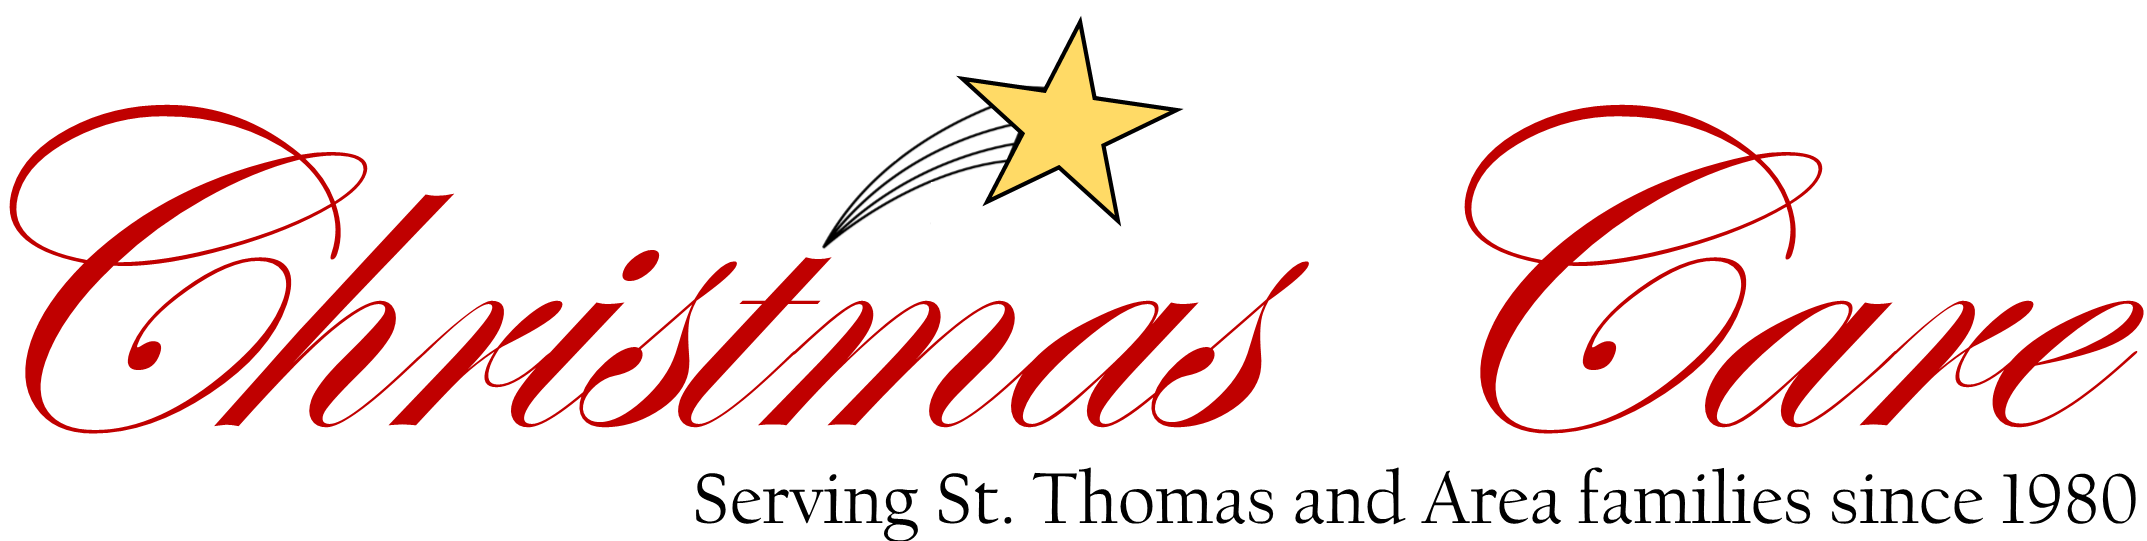 St Thomas Elgin Christmas Care